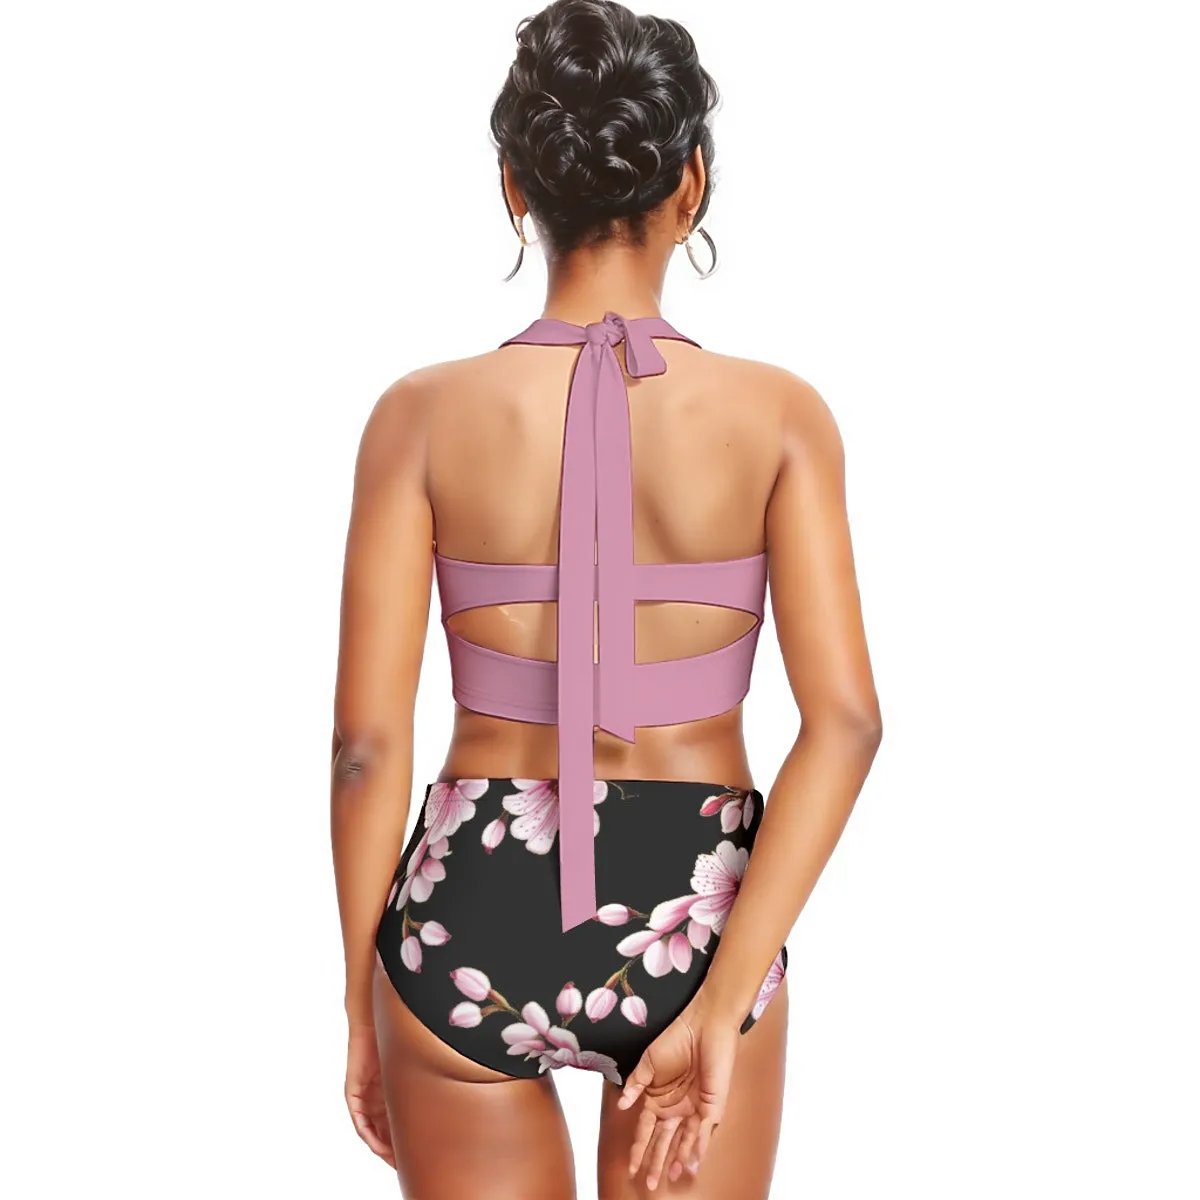 Cherry Blossom Halter Top Women's Bikini Swimsuit